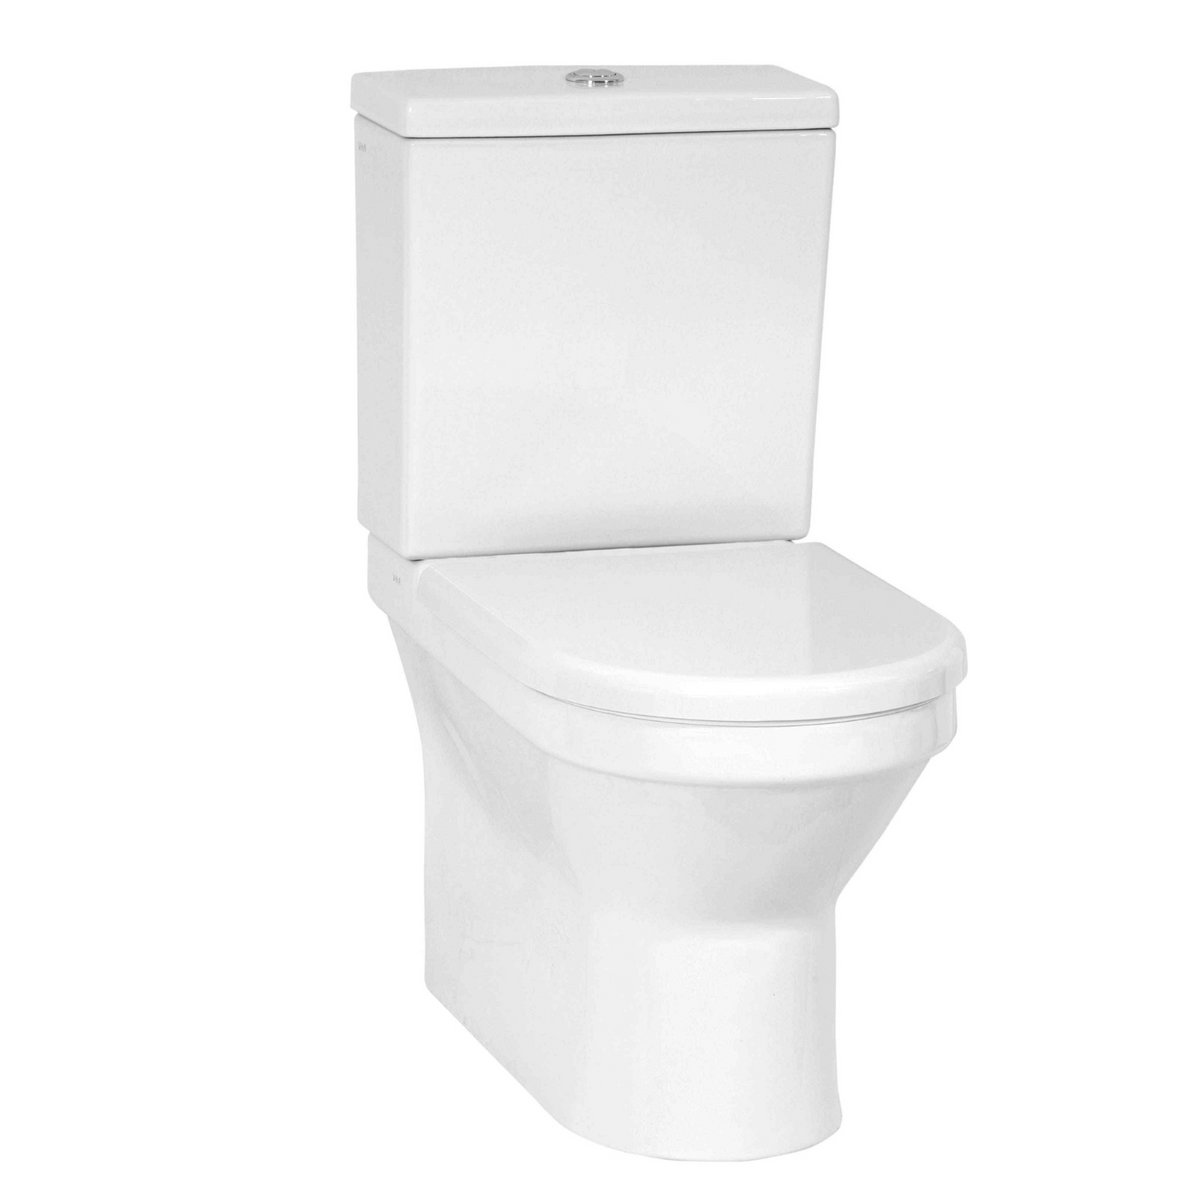 Top Genoa Round Toilets & Basins: B&Q's Best Cloakroom Options